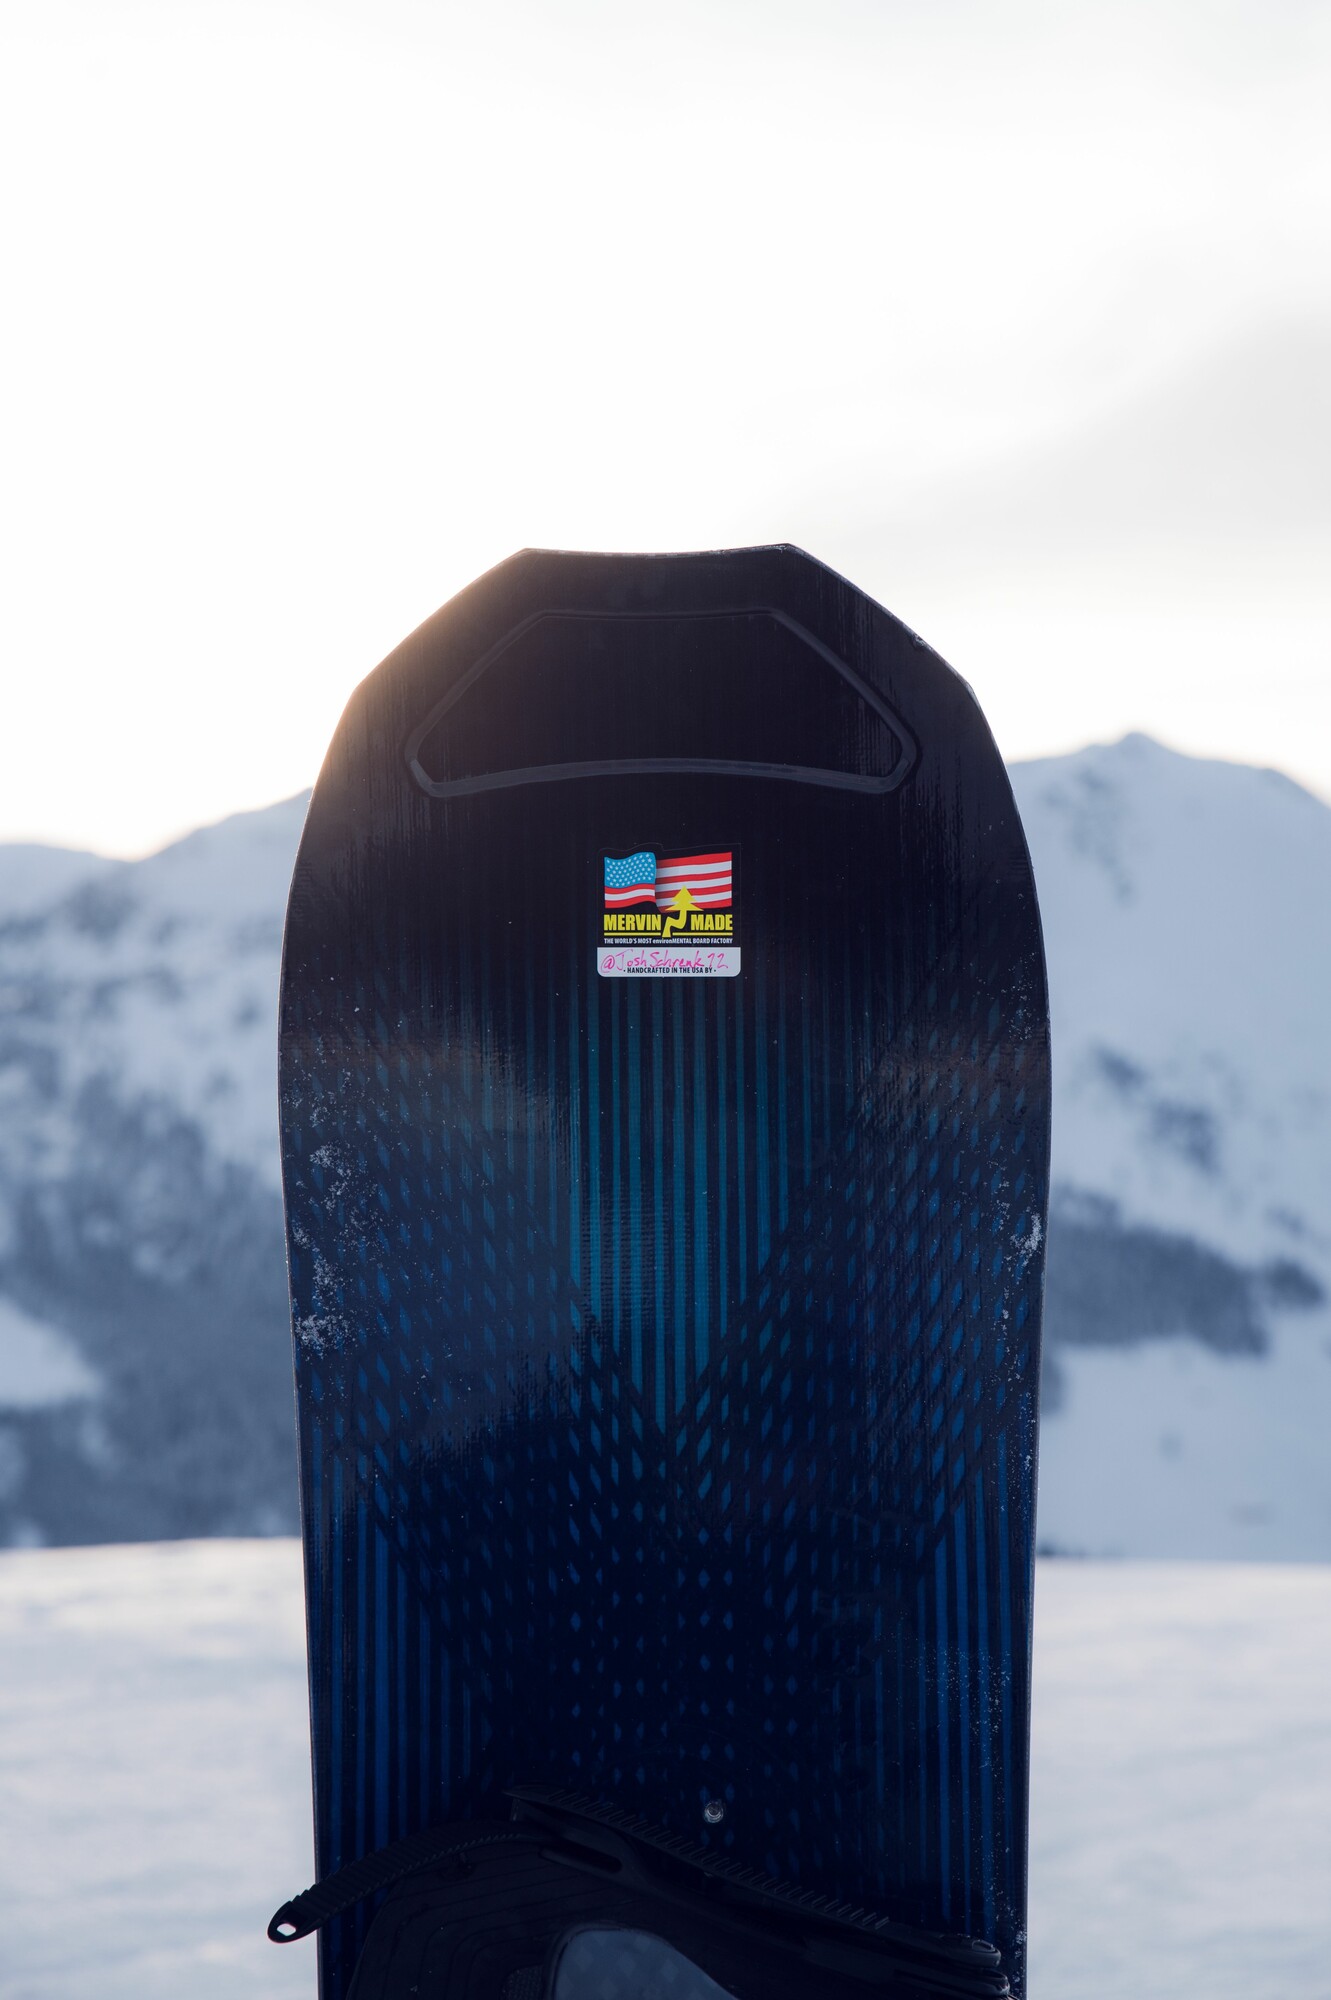 Lib Tech Apex Golden Orca snowboard